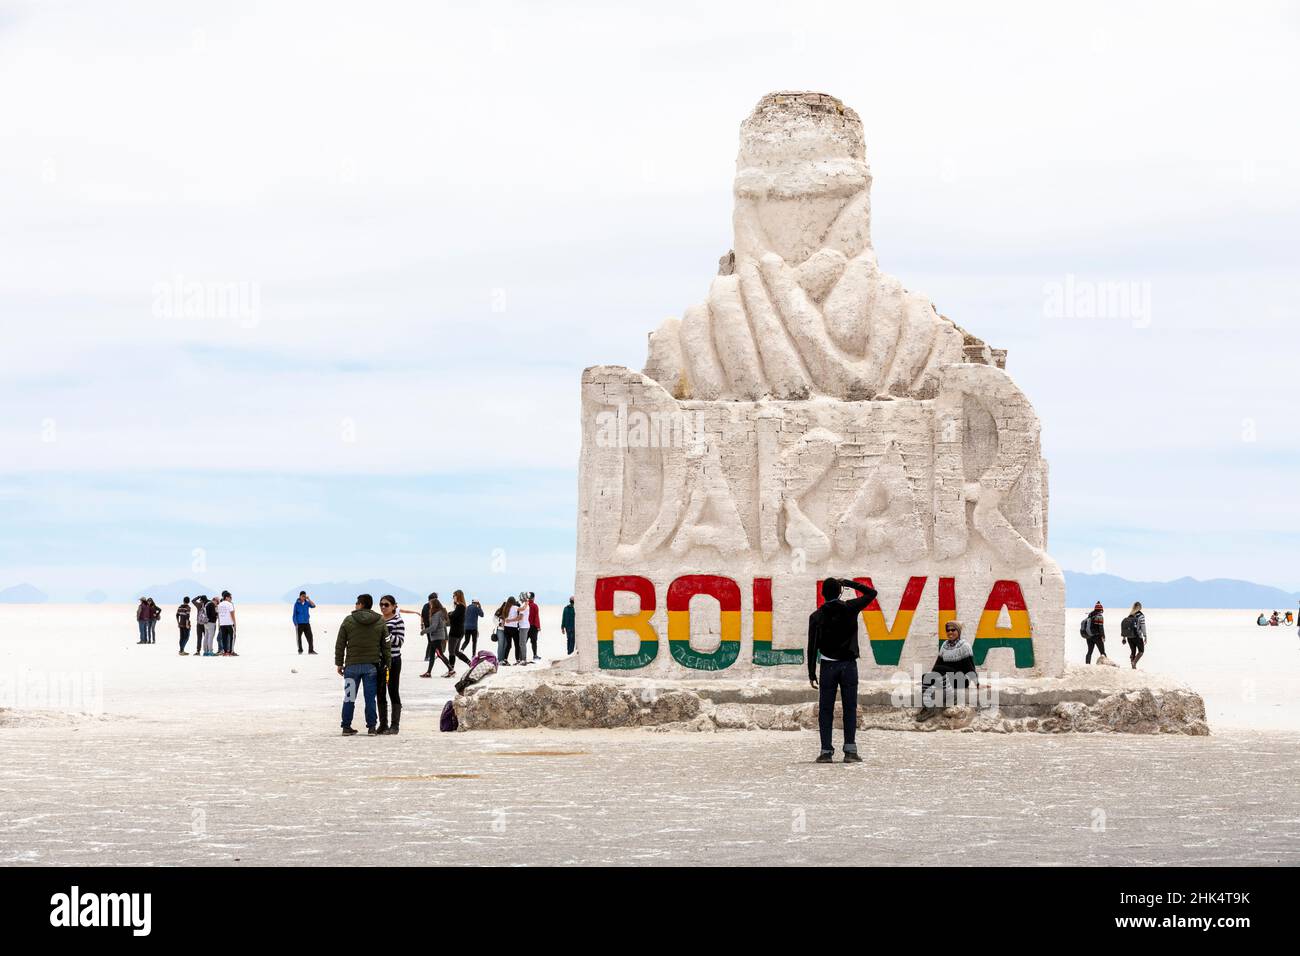 Welcoming statue on display on the salt flats, Salar de Uyuni, Daniel Campos Province, Bolivia, South America Stock Photo